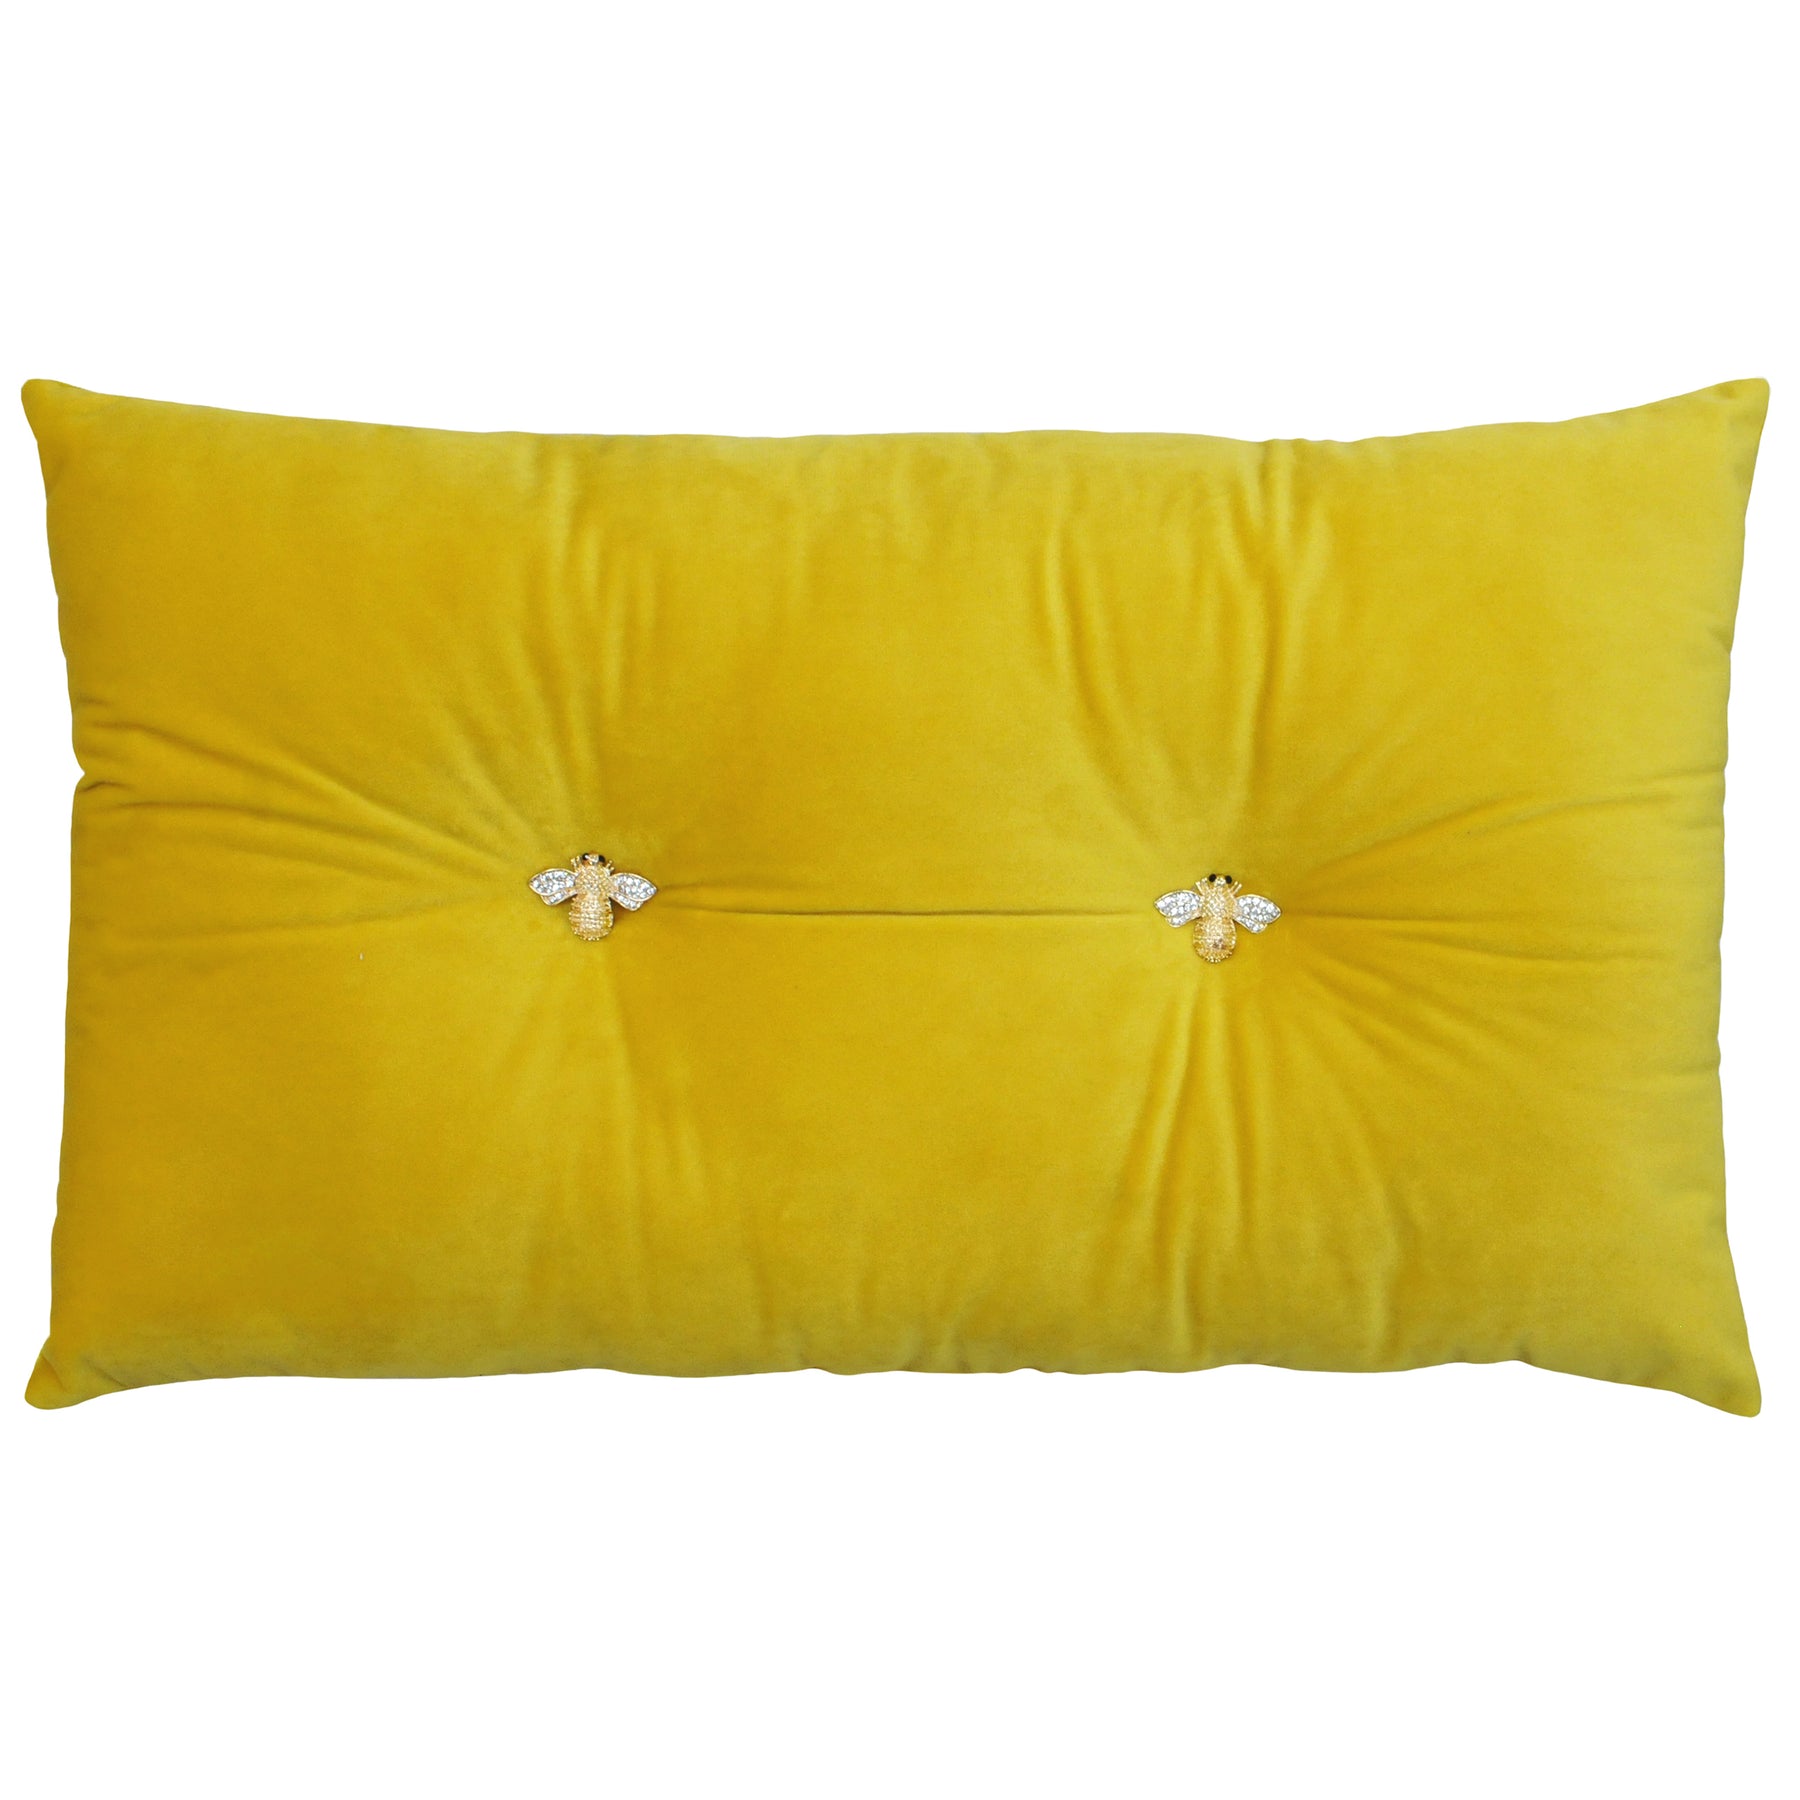 Bumble Bee Velvet 30cm x 50cm Filled Cushion Yellow